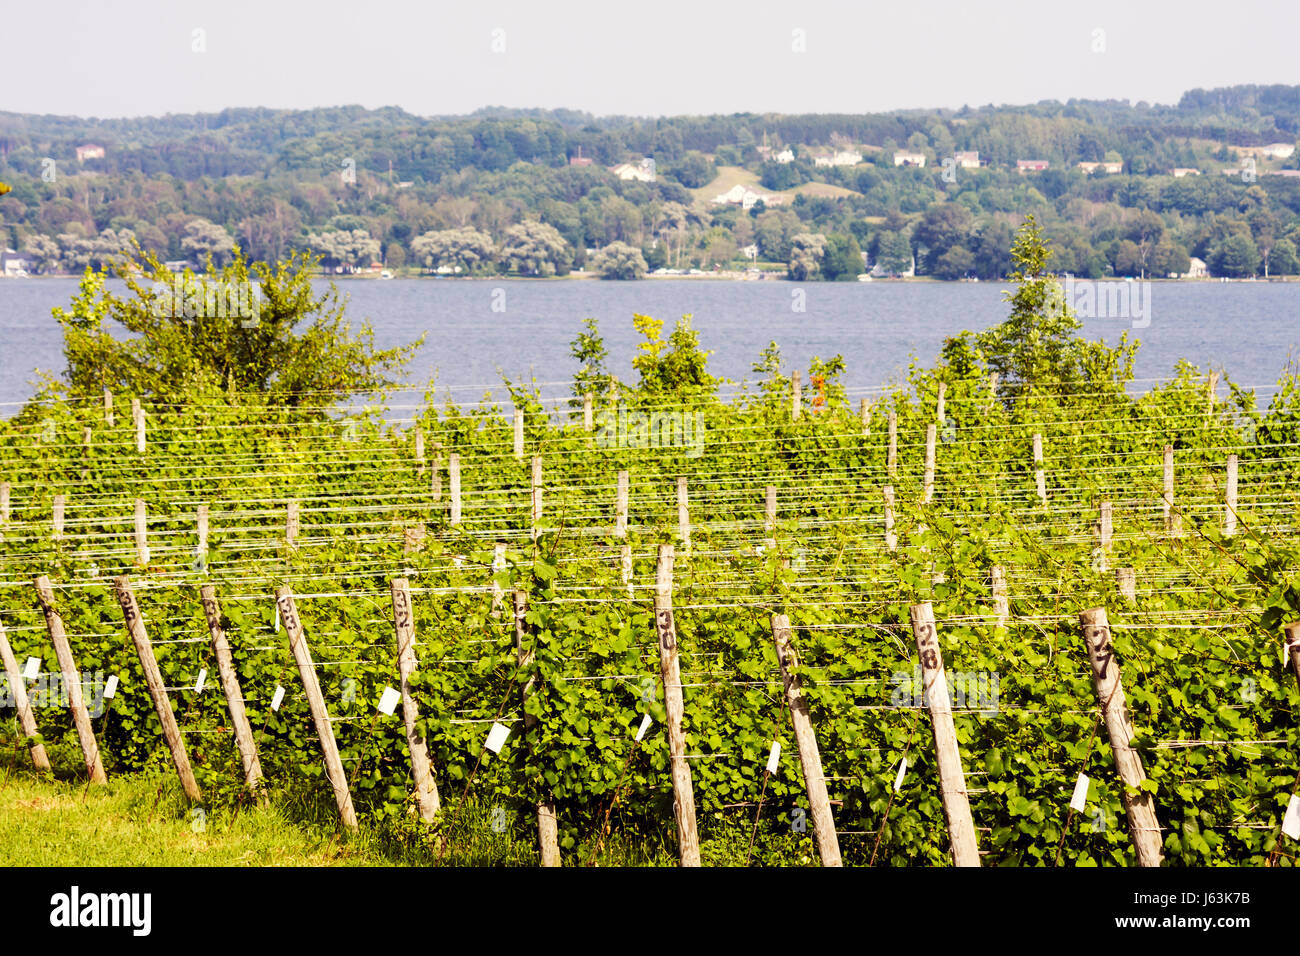 Michigan Traverse City,Leelanau Peninsula,Bel Lago Vineyard & Winery,South Lake Leelanau,vines,grapes,trellis,plants,farm,viticulture,water,scenic,vie Stock Photo